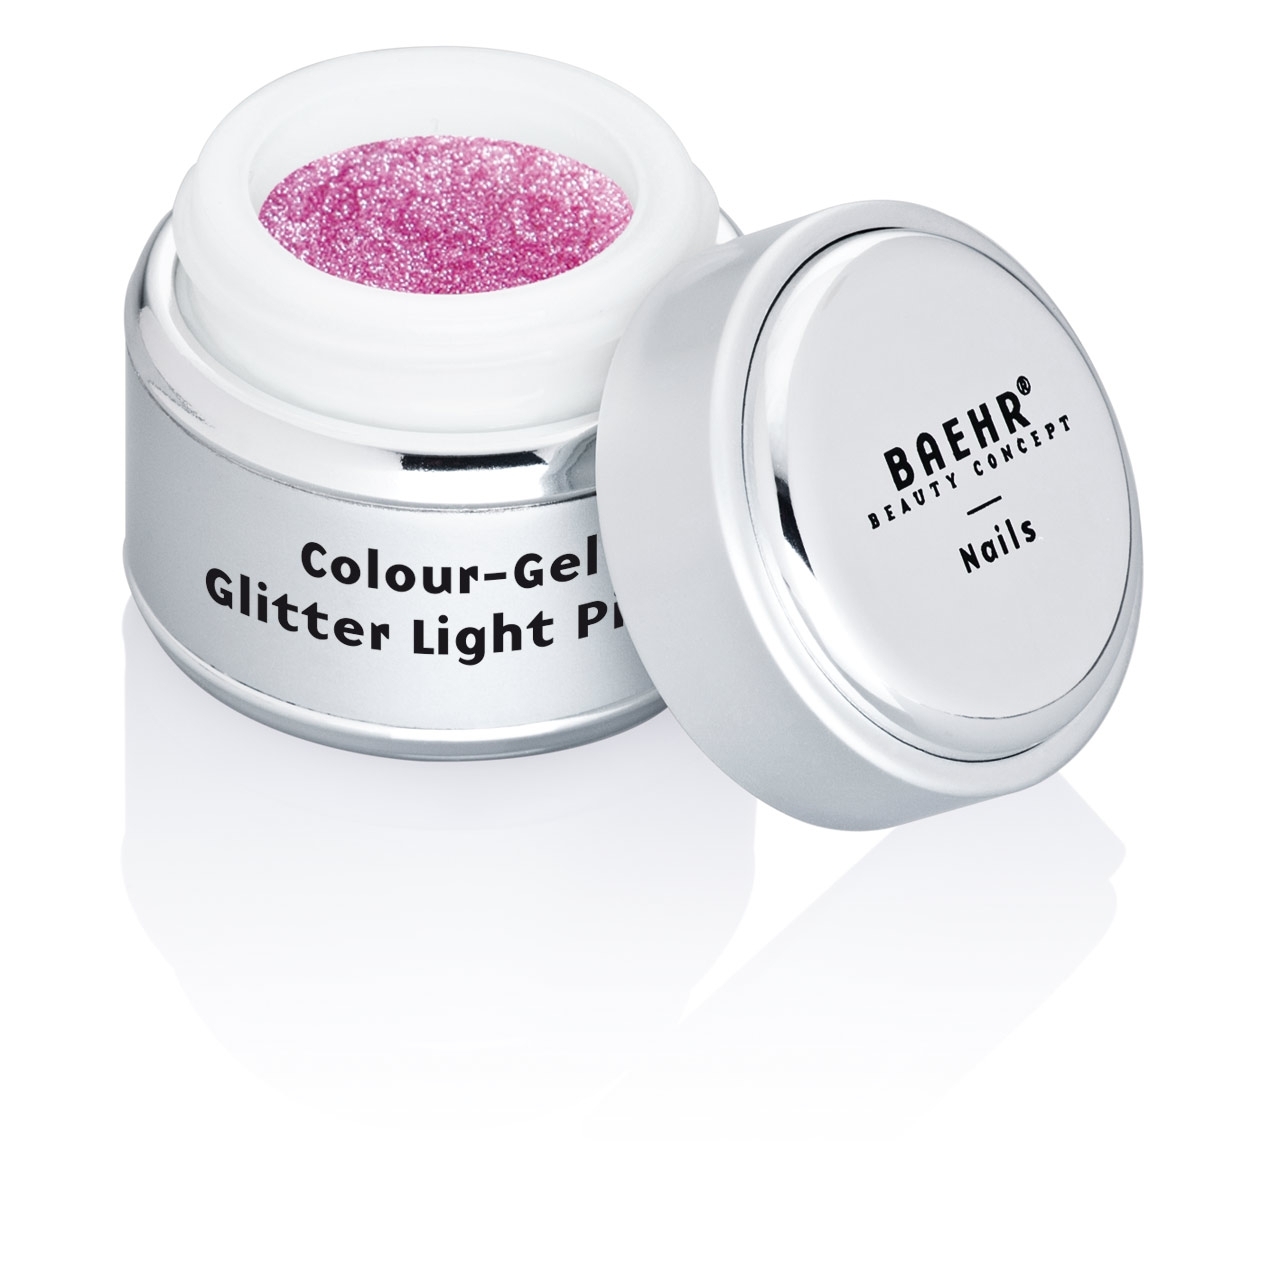 BAEHR BEAUTY CONCEPT - NAILS Colour-Gel Glitter Light Pink 5 ml